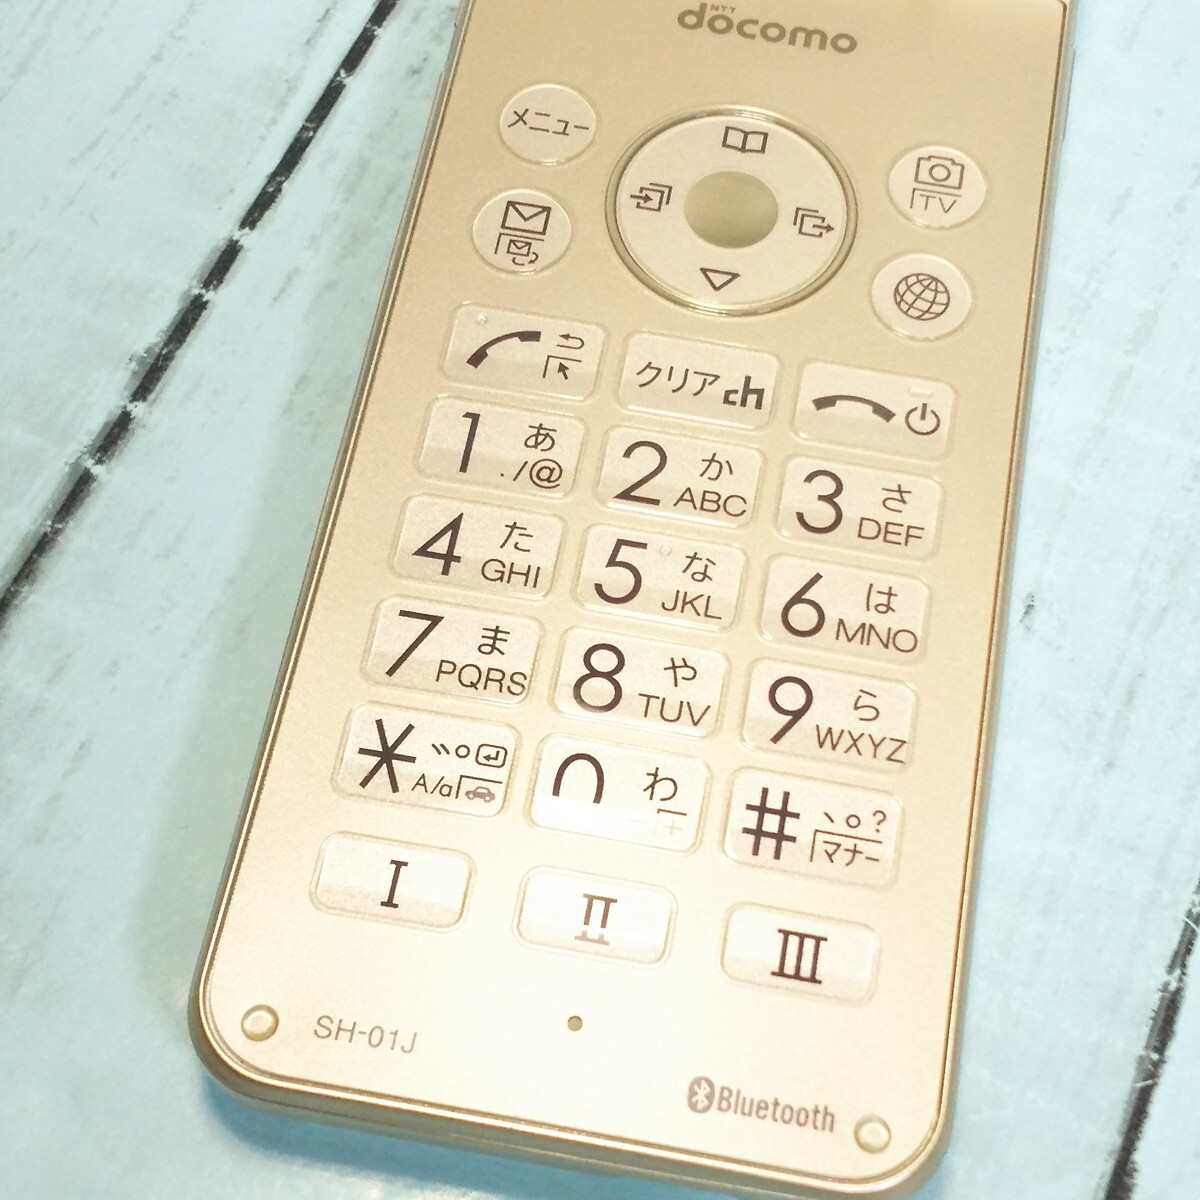 docomo AQUOS SH-01J Gold cellular phone body White ROM SIM lock released .SIM free beautiful goods 893829